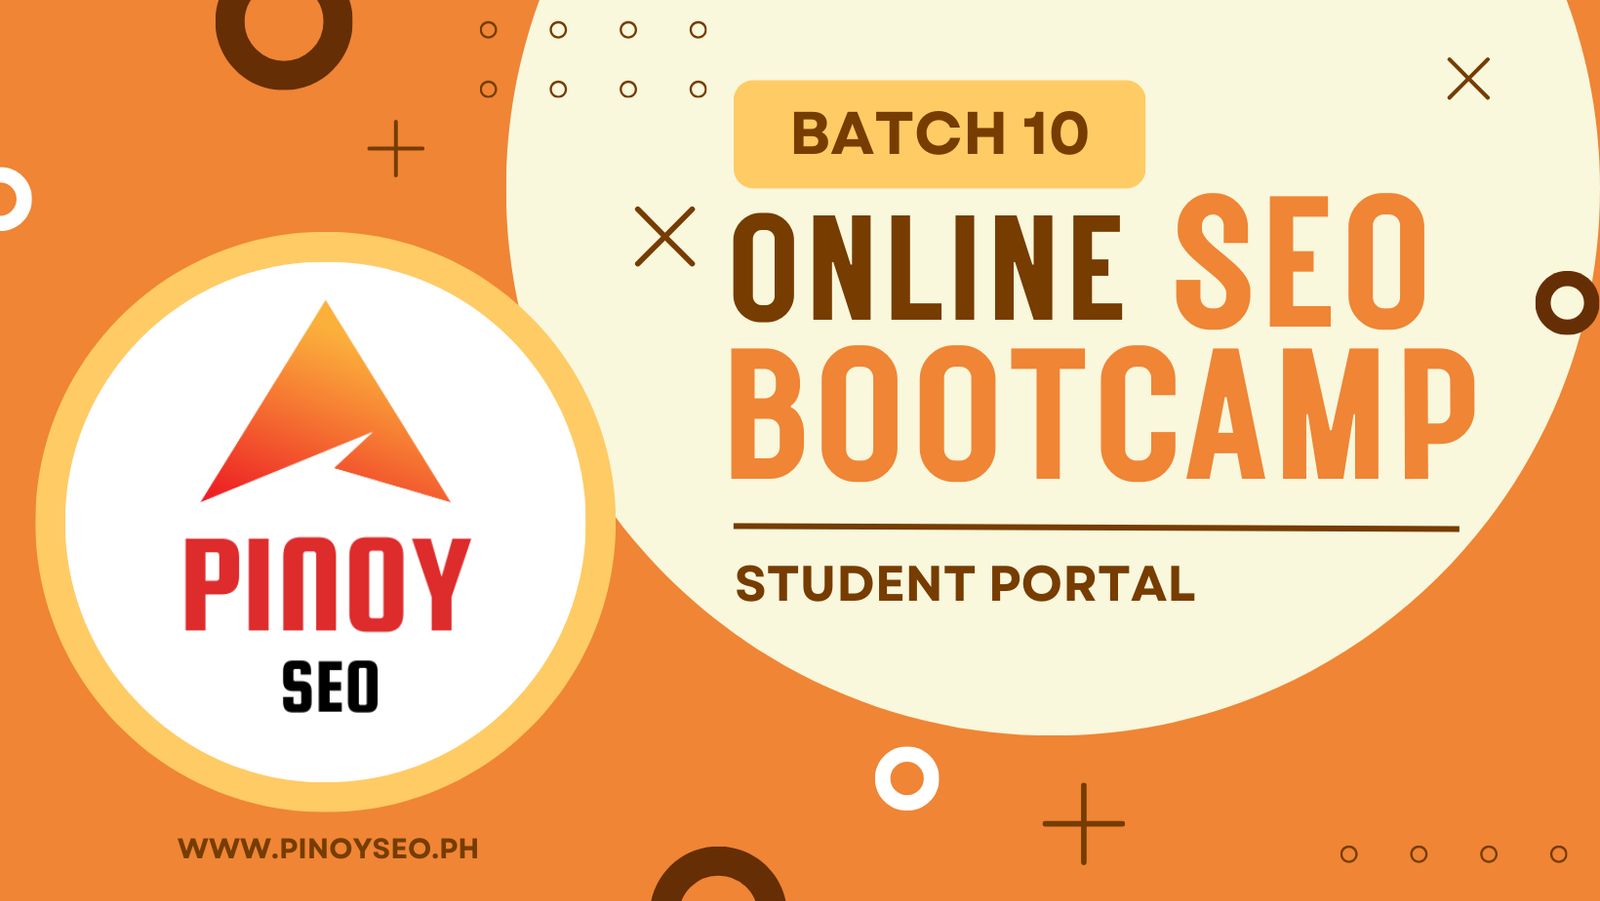 Online SEO Bootcamp – Batch 10 Student Portal